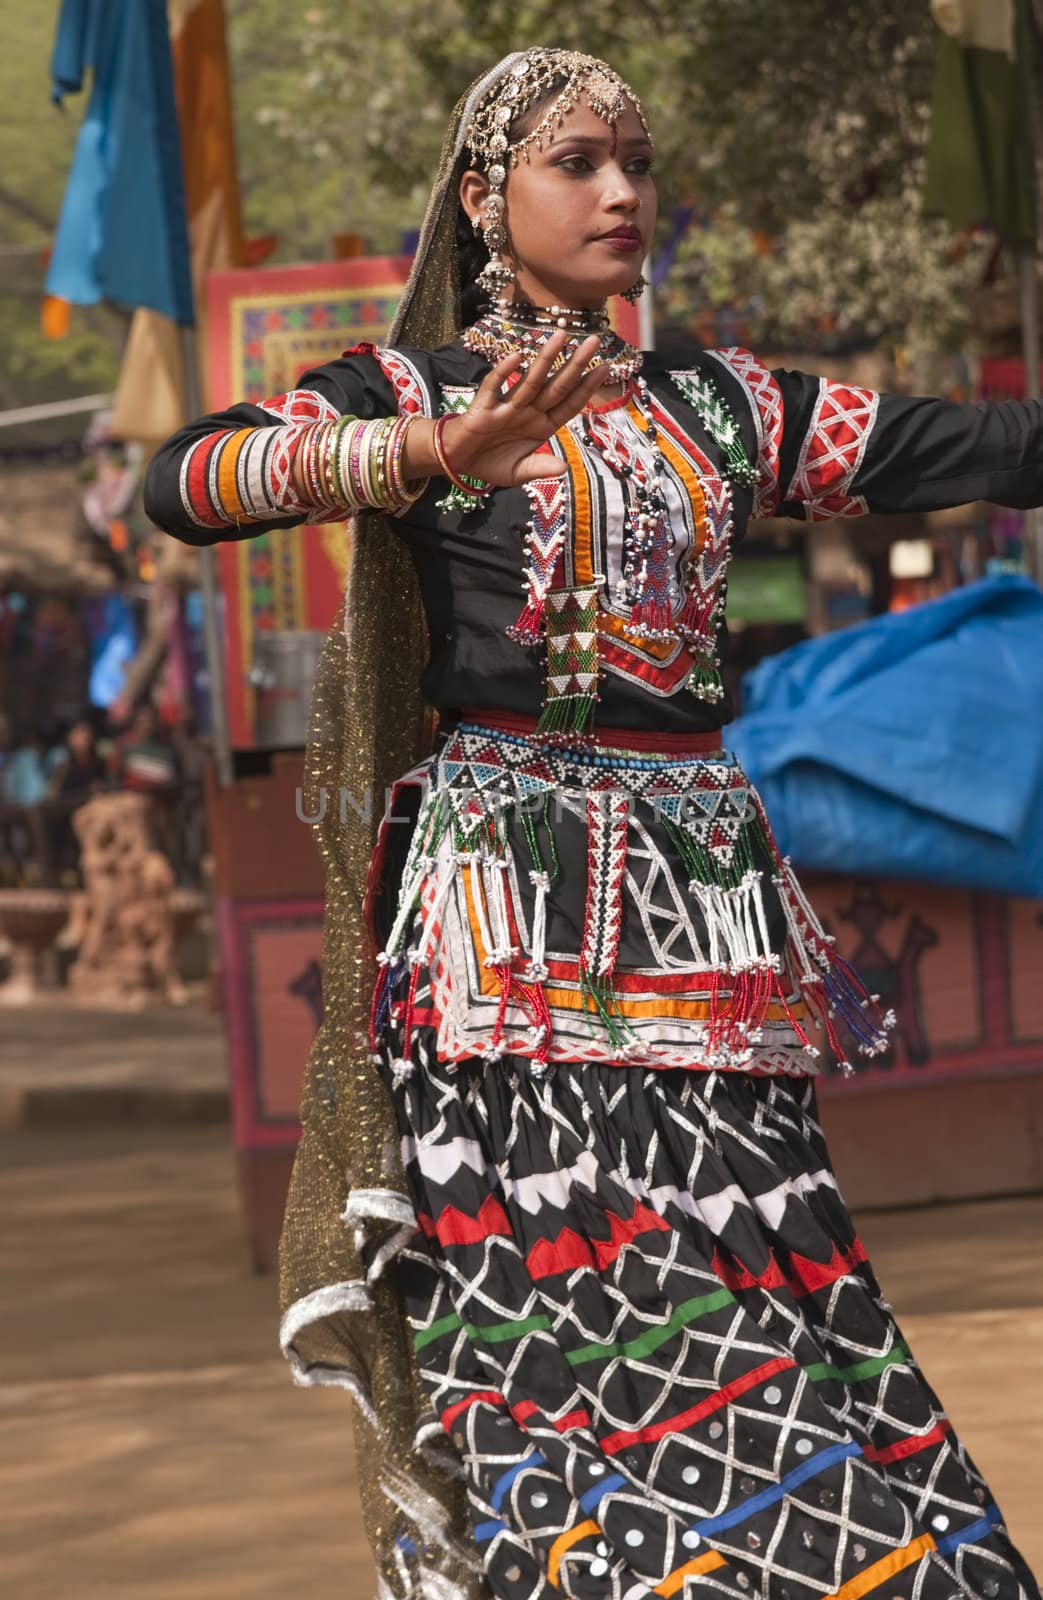 Indian Folk Dancer by JeremyRichards